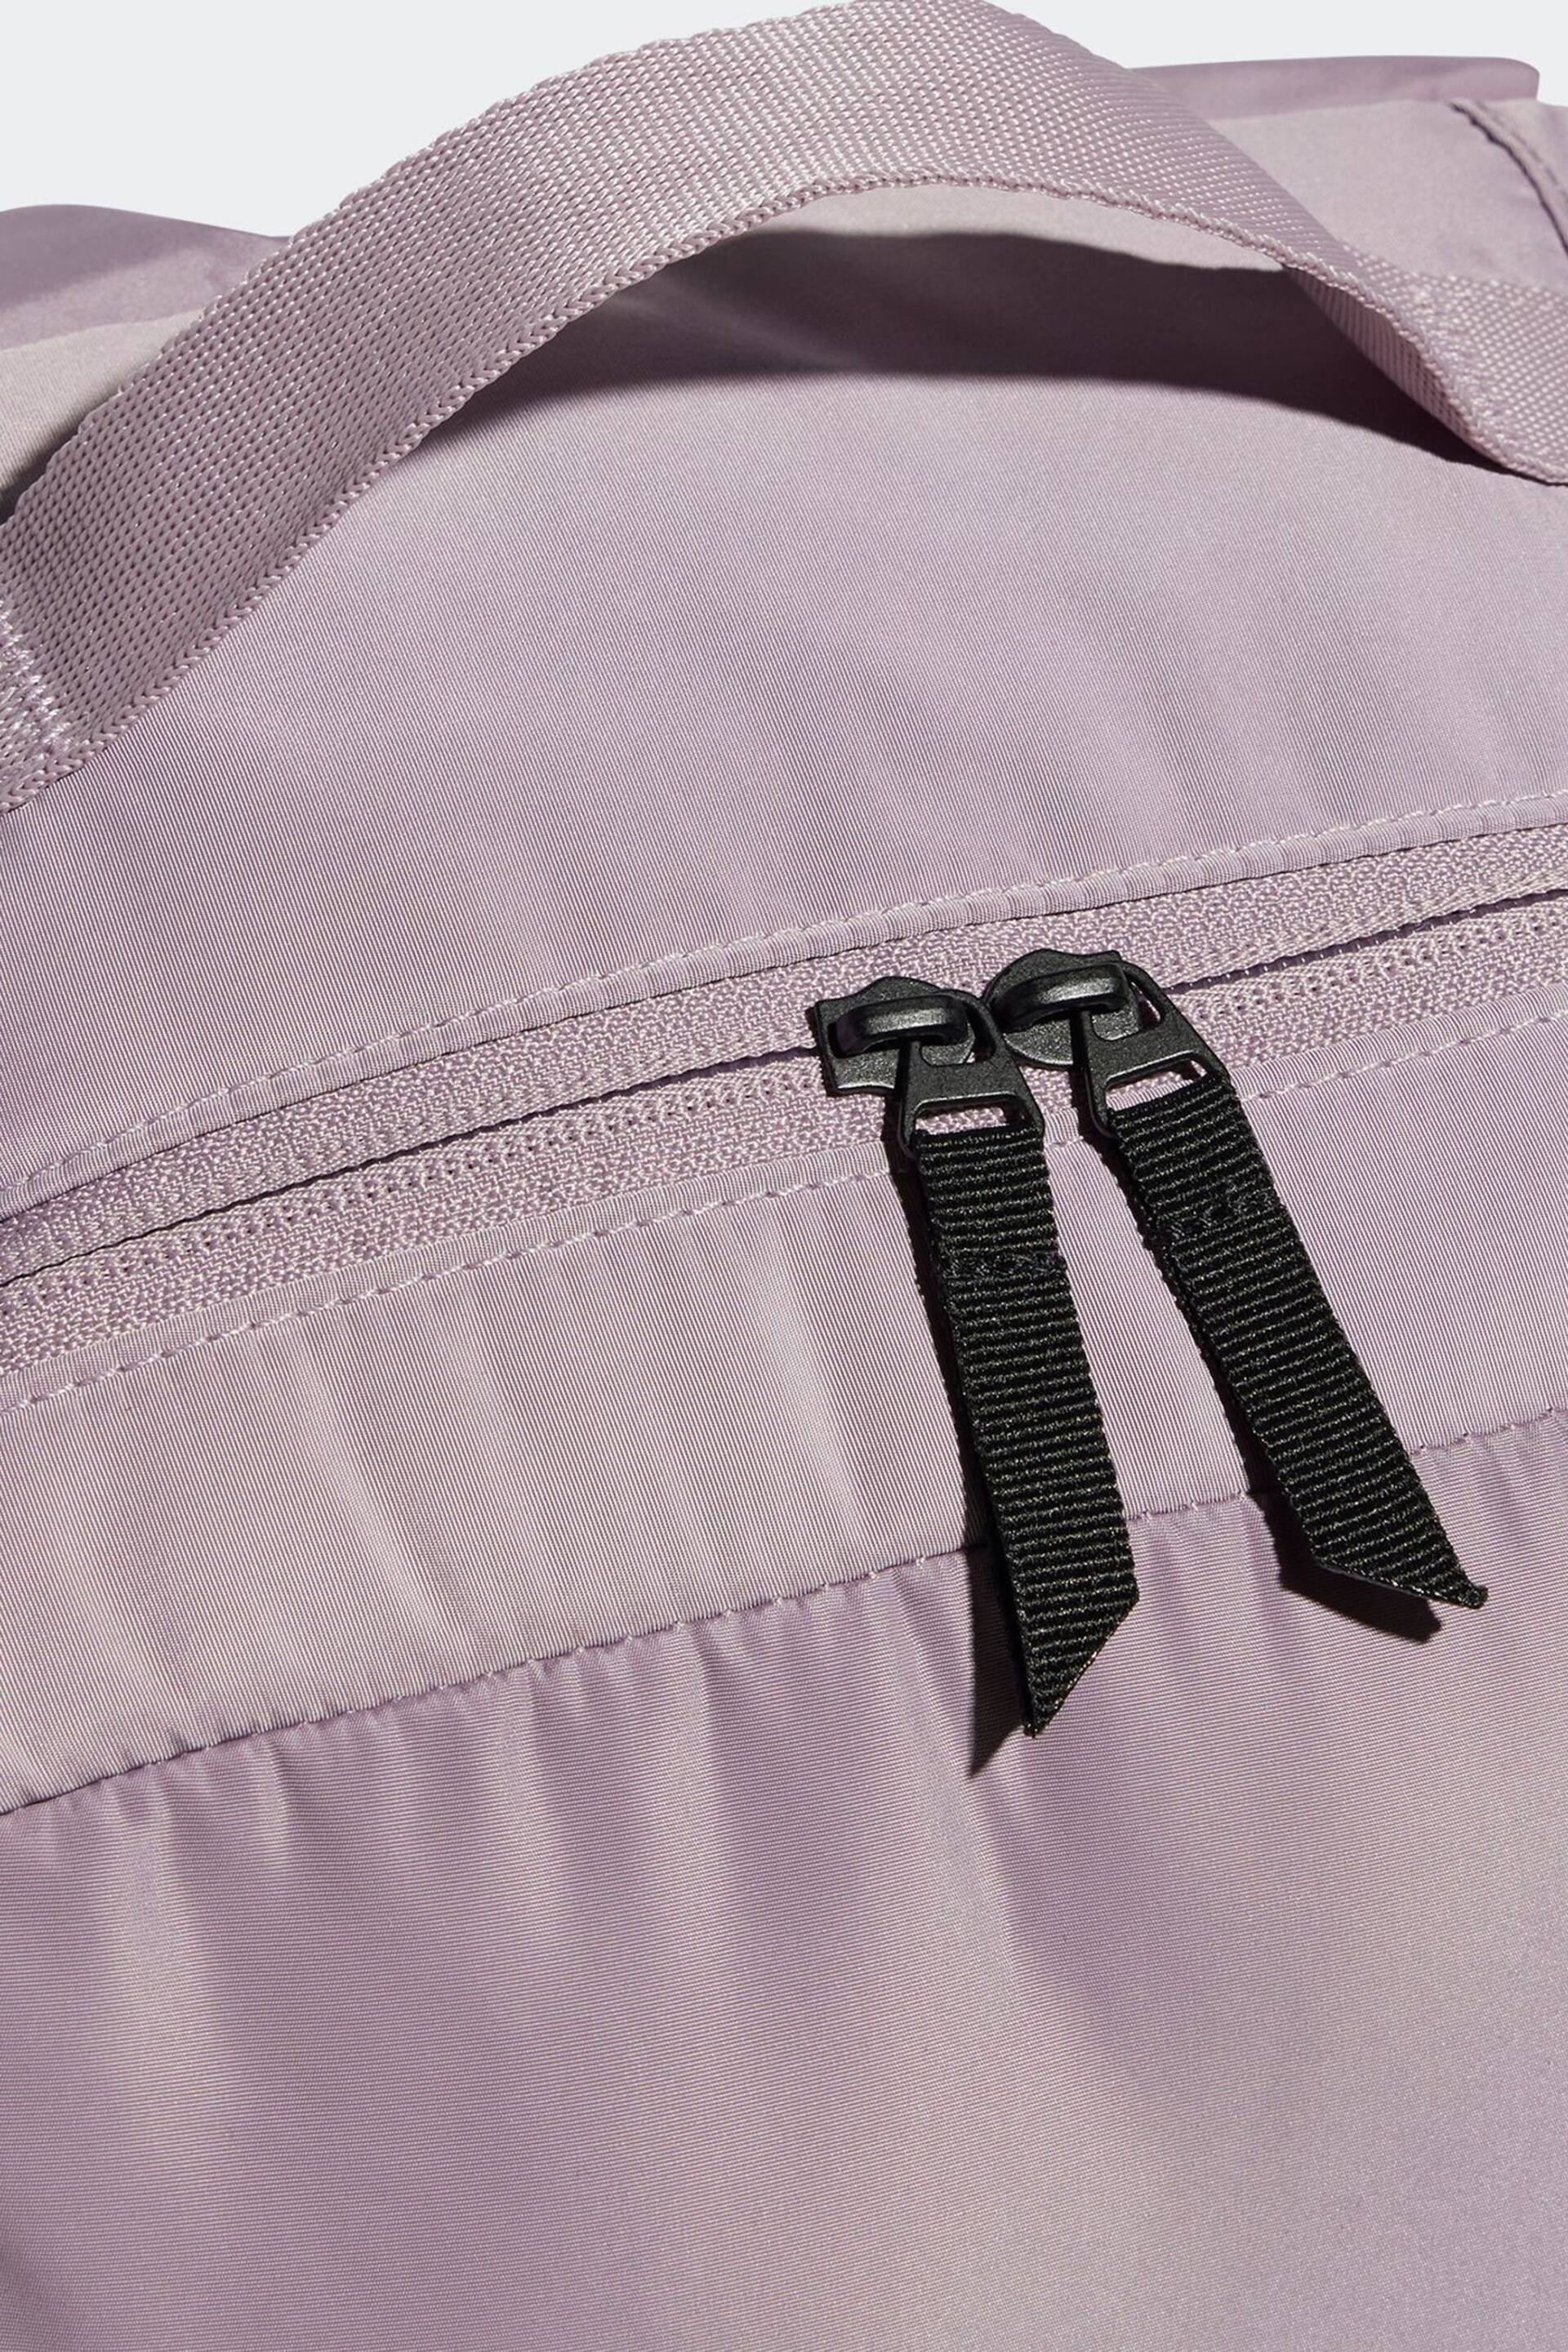 adidas Purple Sport Padded Backpack - Image 6 of 6